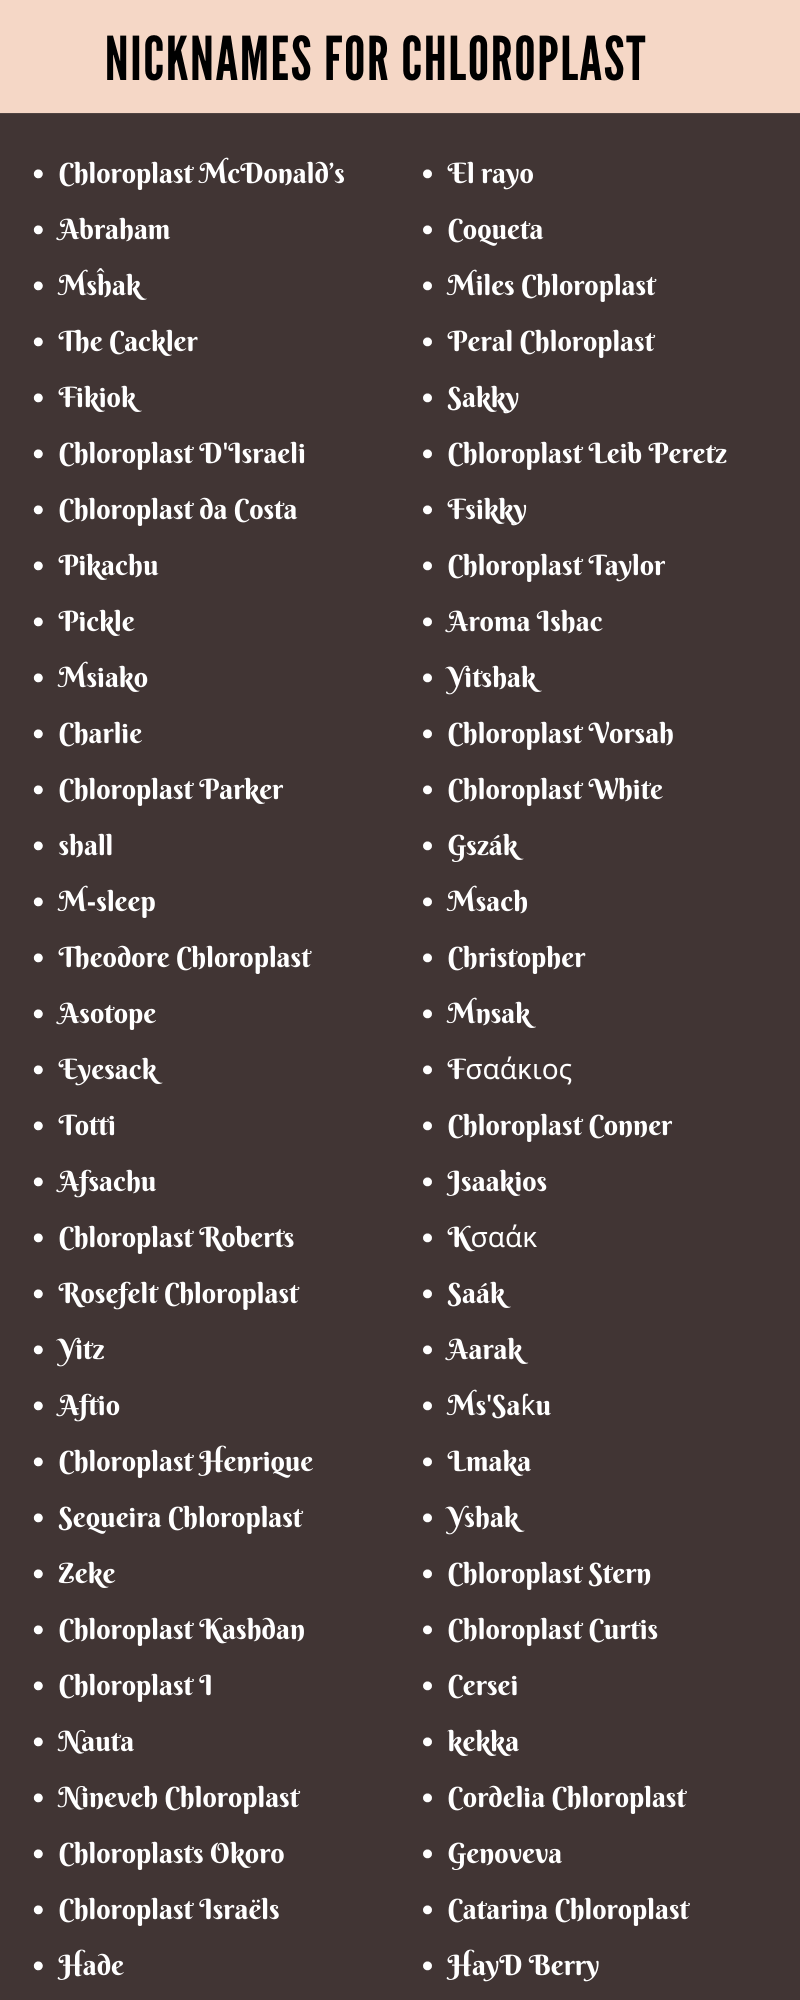 Nicknames for Chloroplast